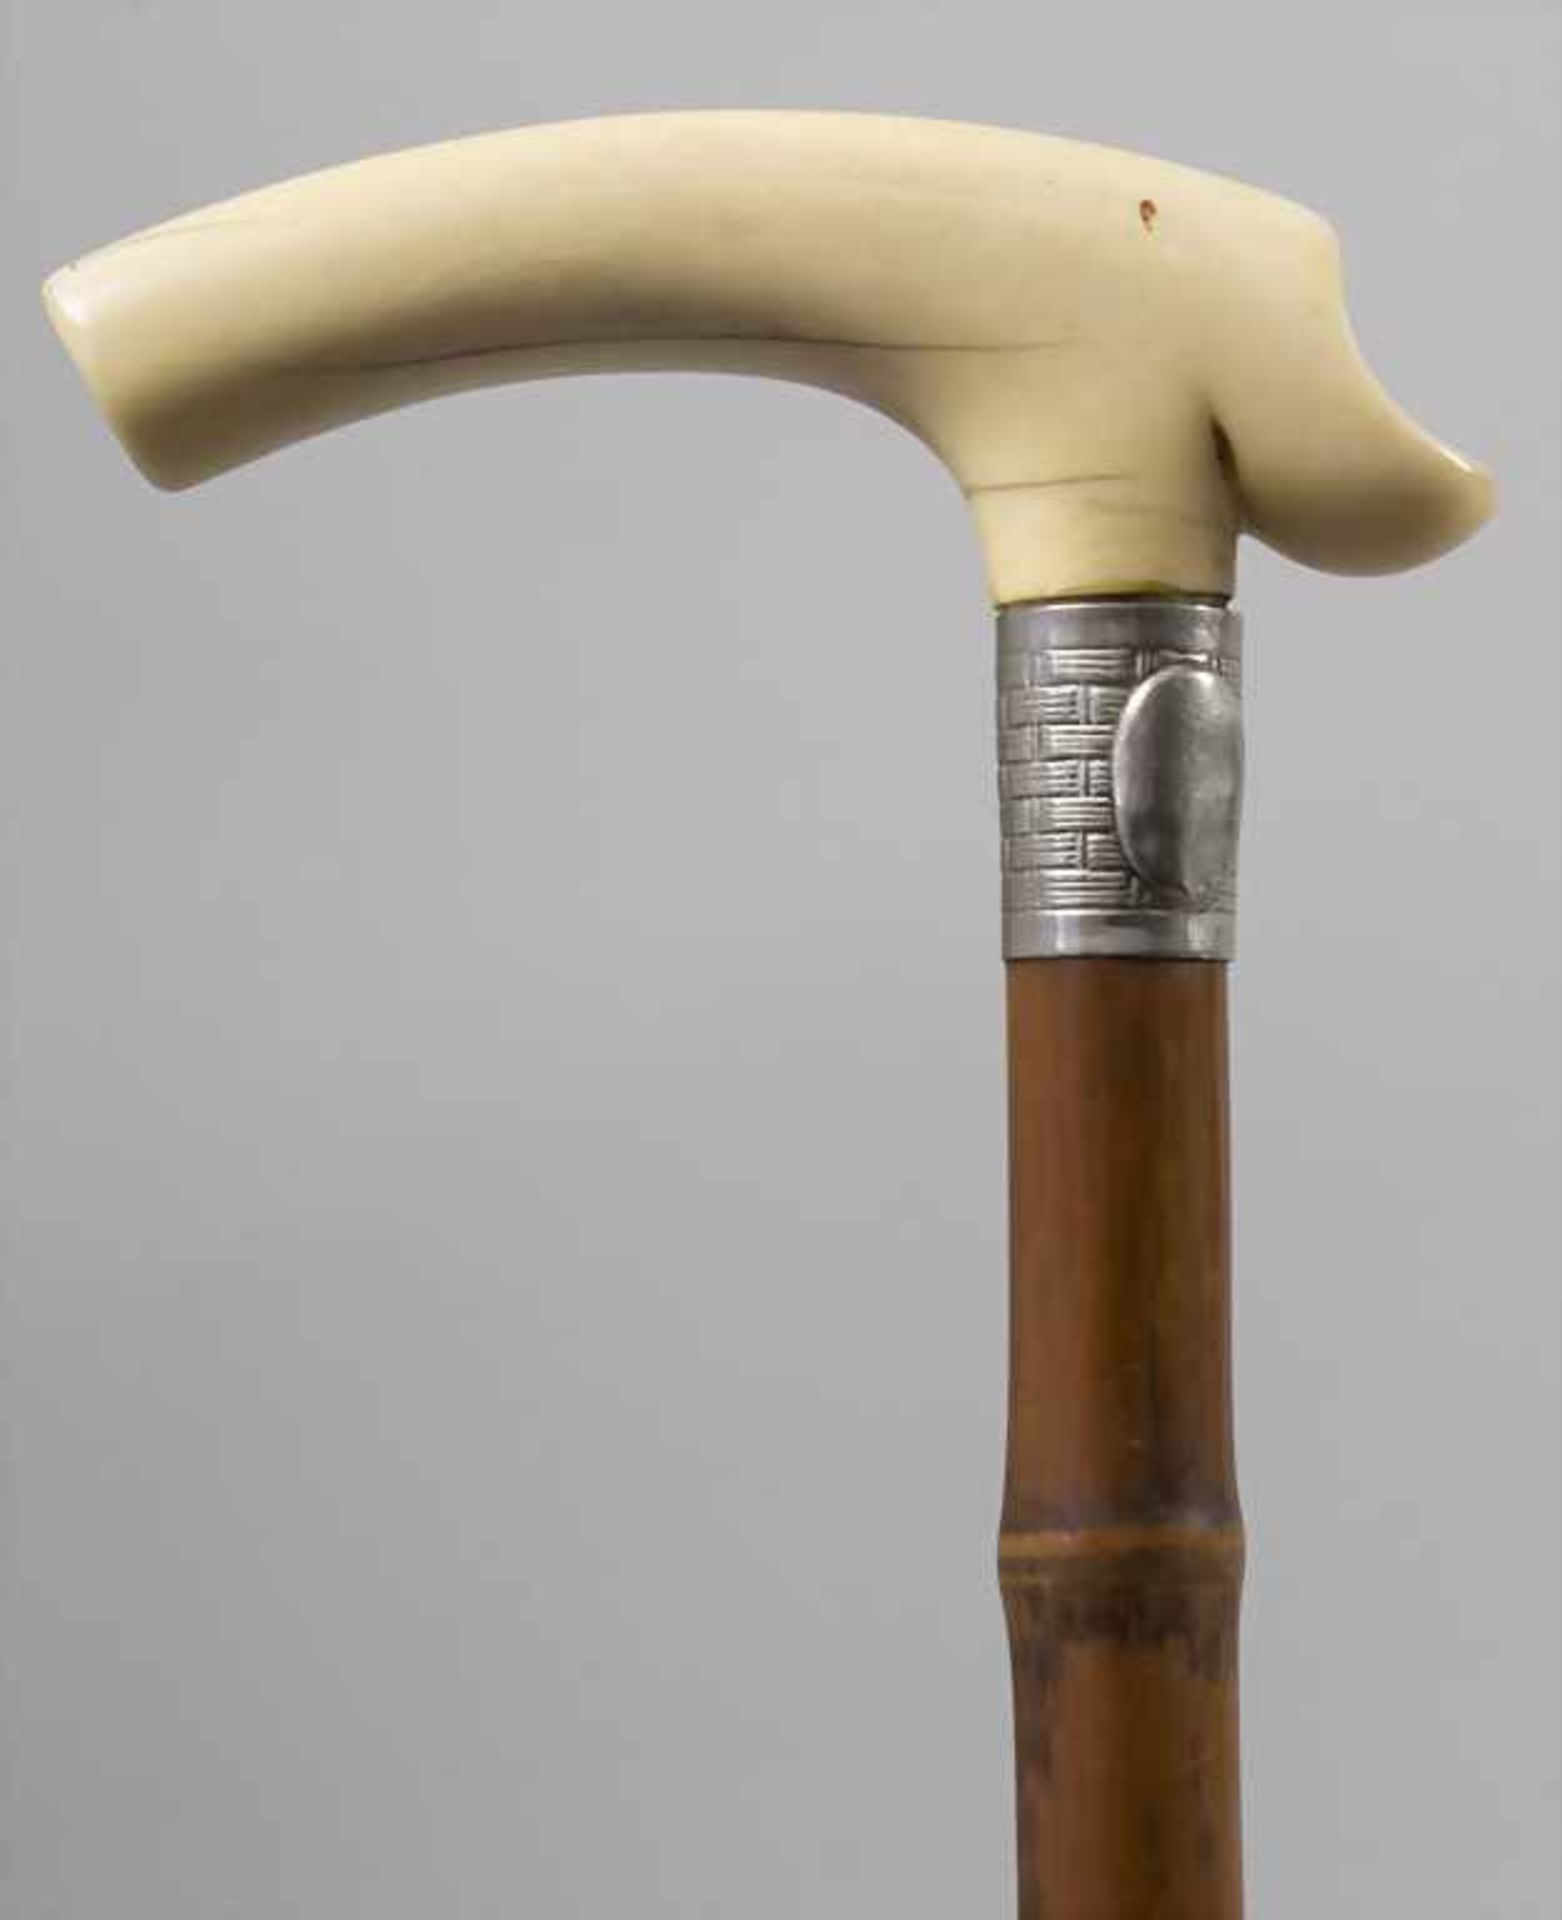 Sammlung 10 Gehstöcke / A collection of 10 canes with ivory handle - Bild 12 aus 27